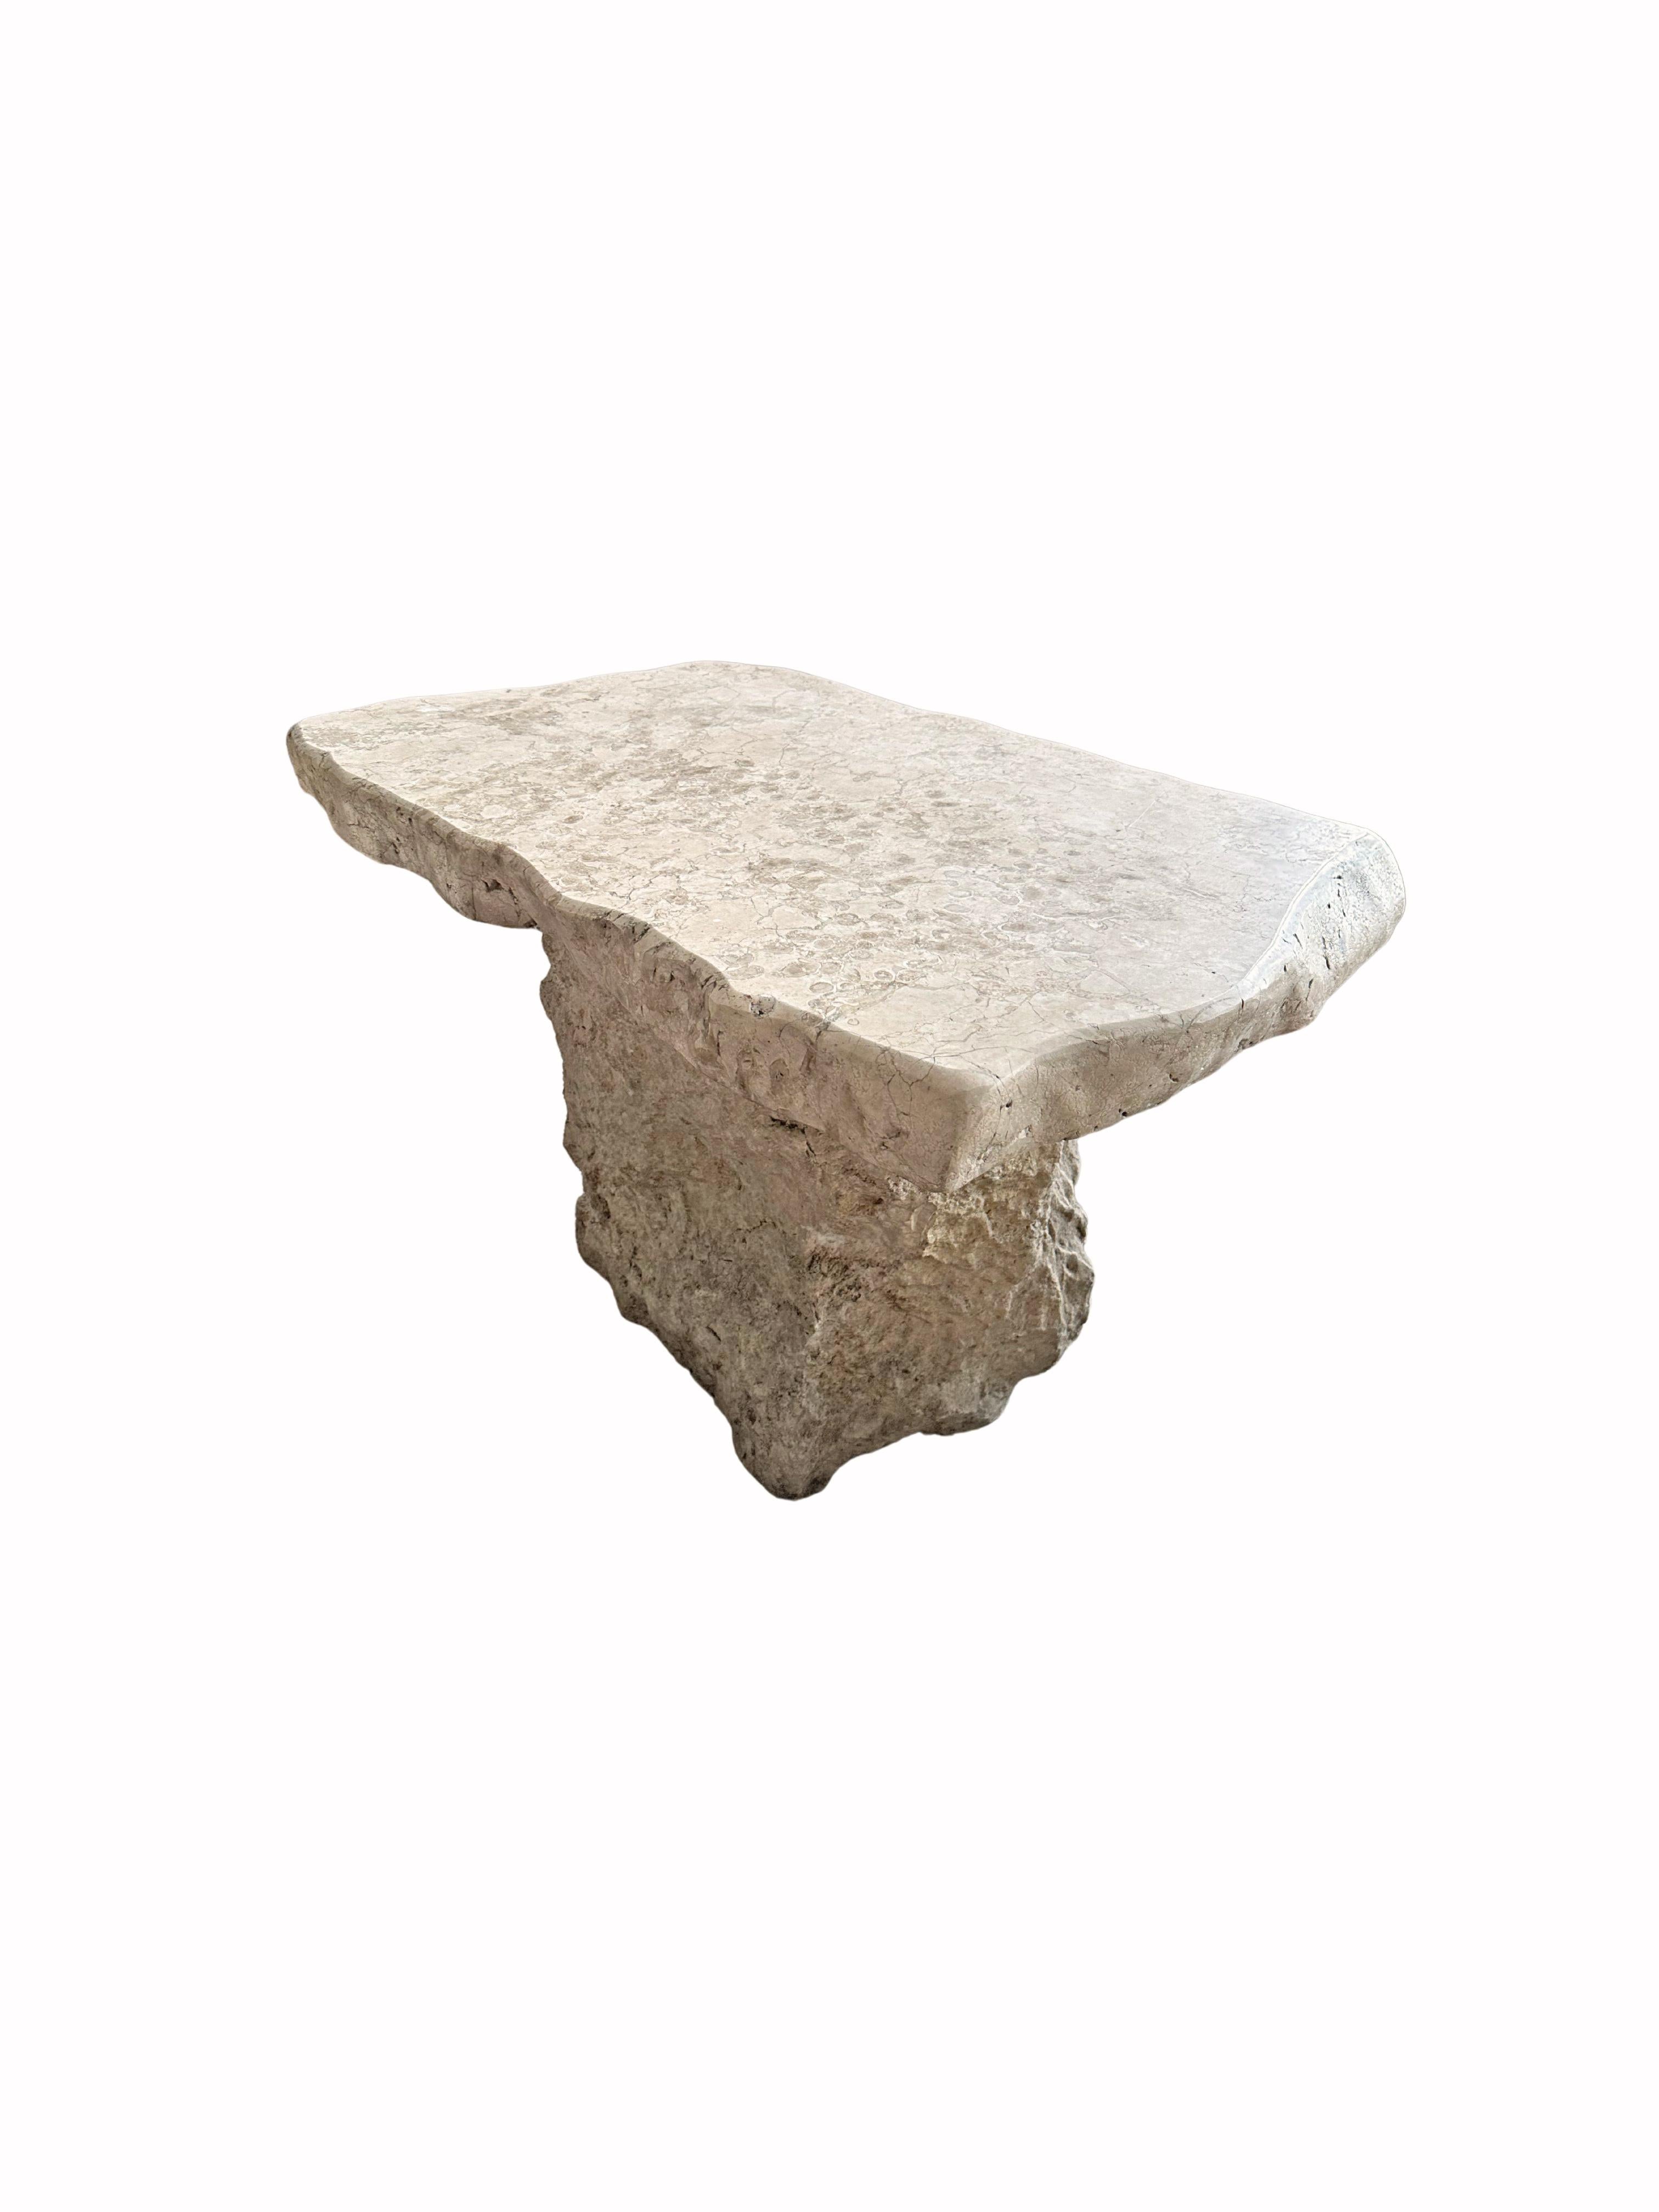 Sculptural Marble Table, Modern Organic 1